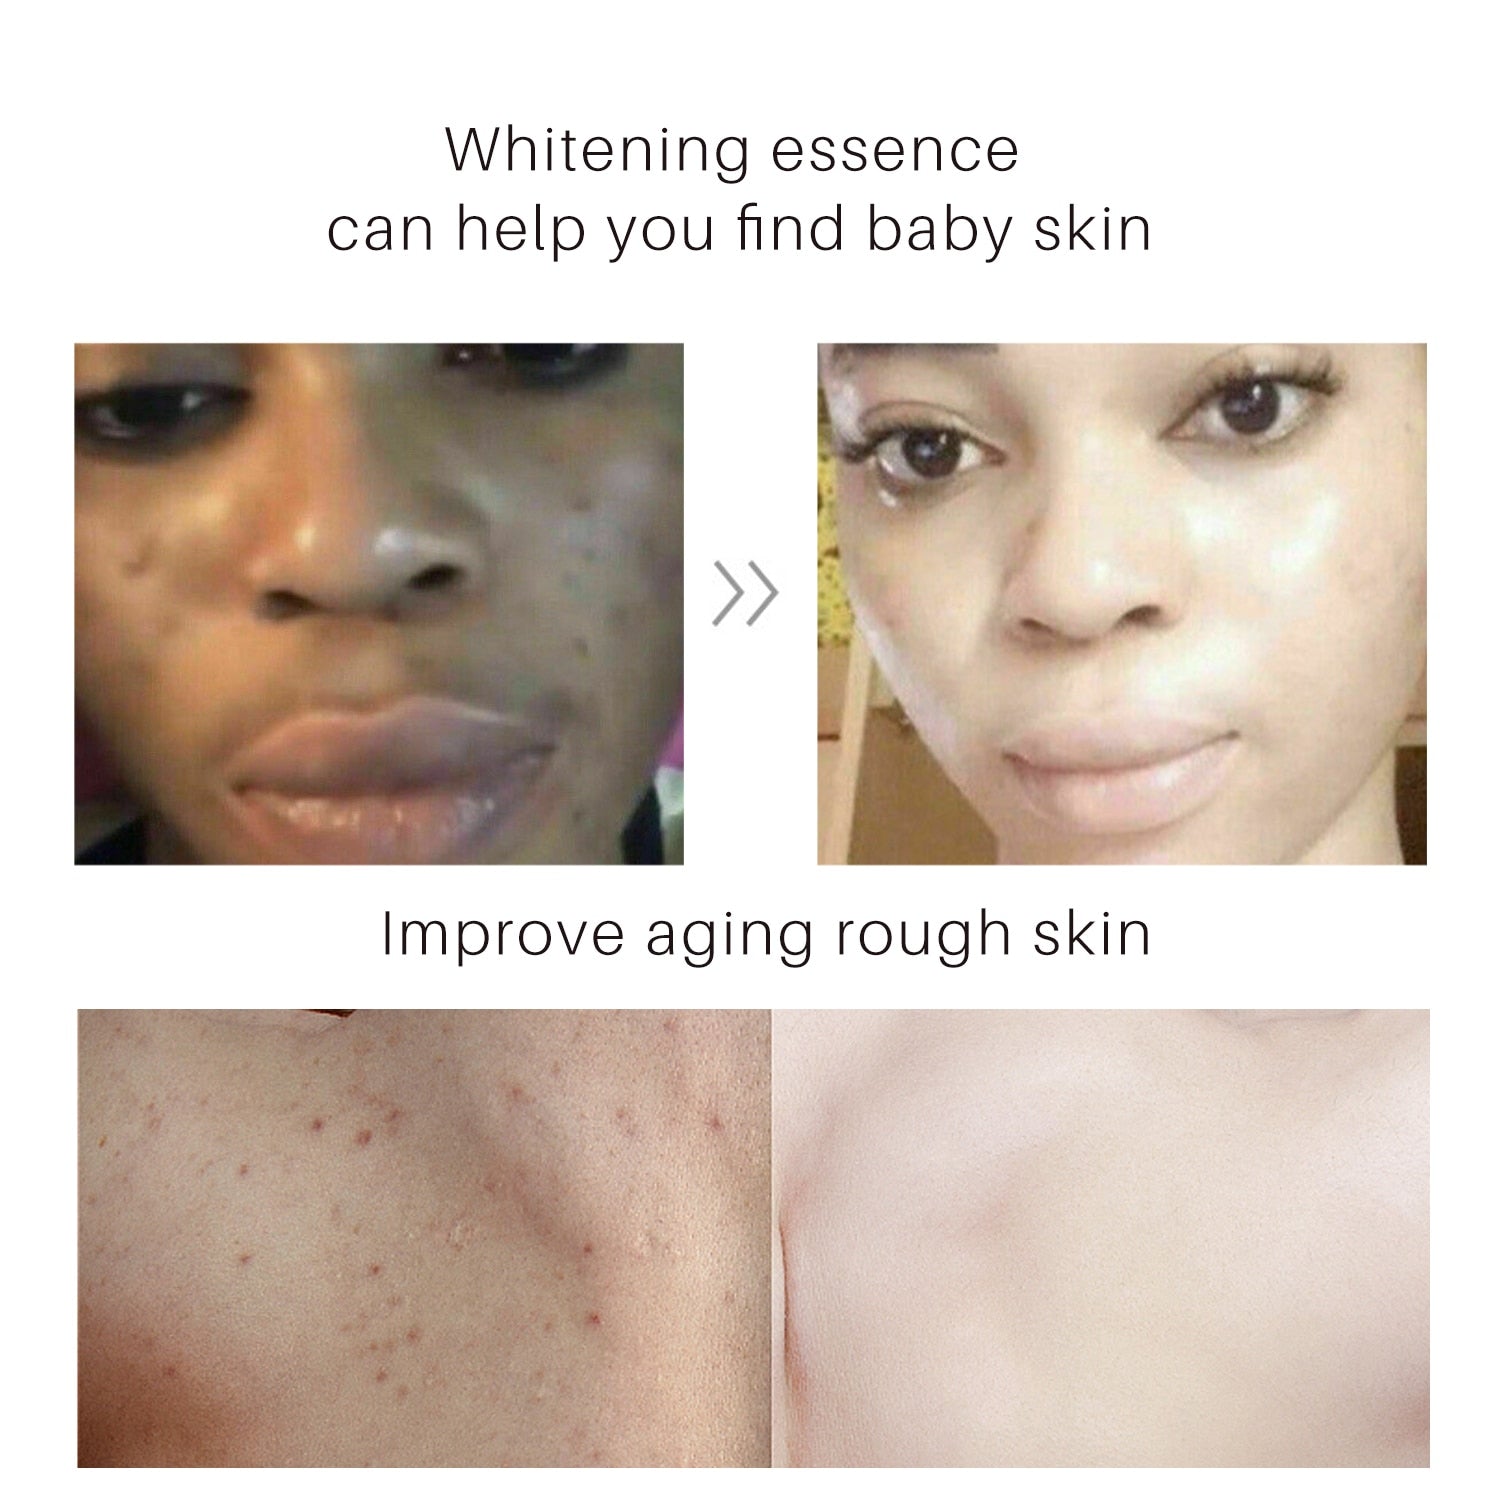 Turmeric Anti Aging Skin Lightening Cream